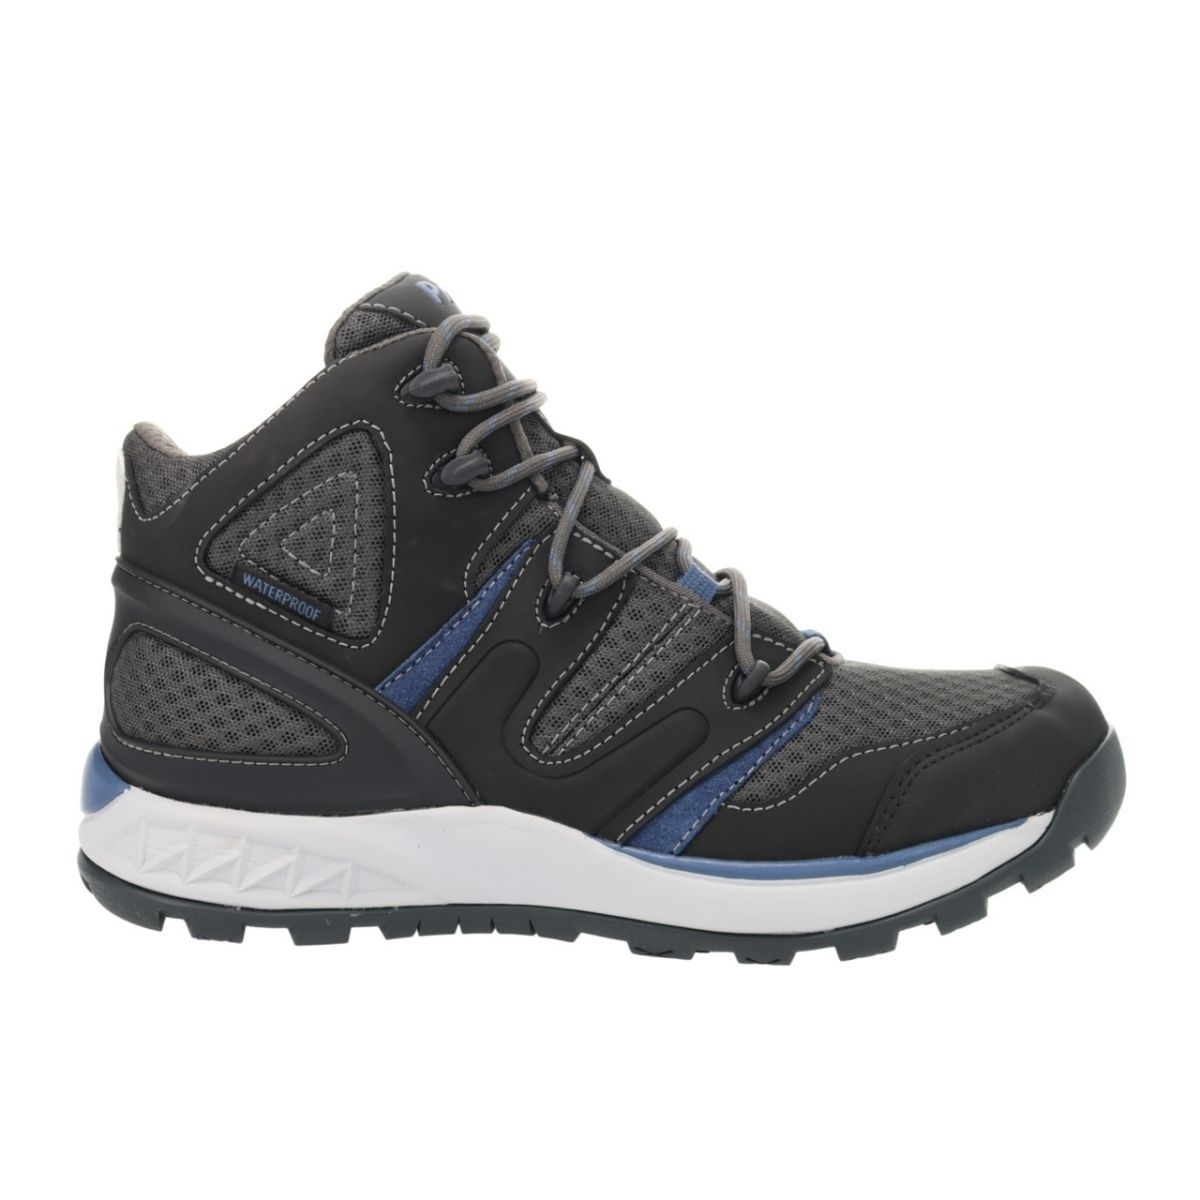 Propet Men's Veymont Waterproof Hiking Boot Grey/Blue - MOA022SGRB GREY/BLUE - GREY/BLUE, 8.5 XX-Wide